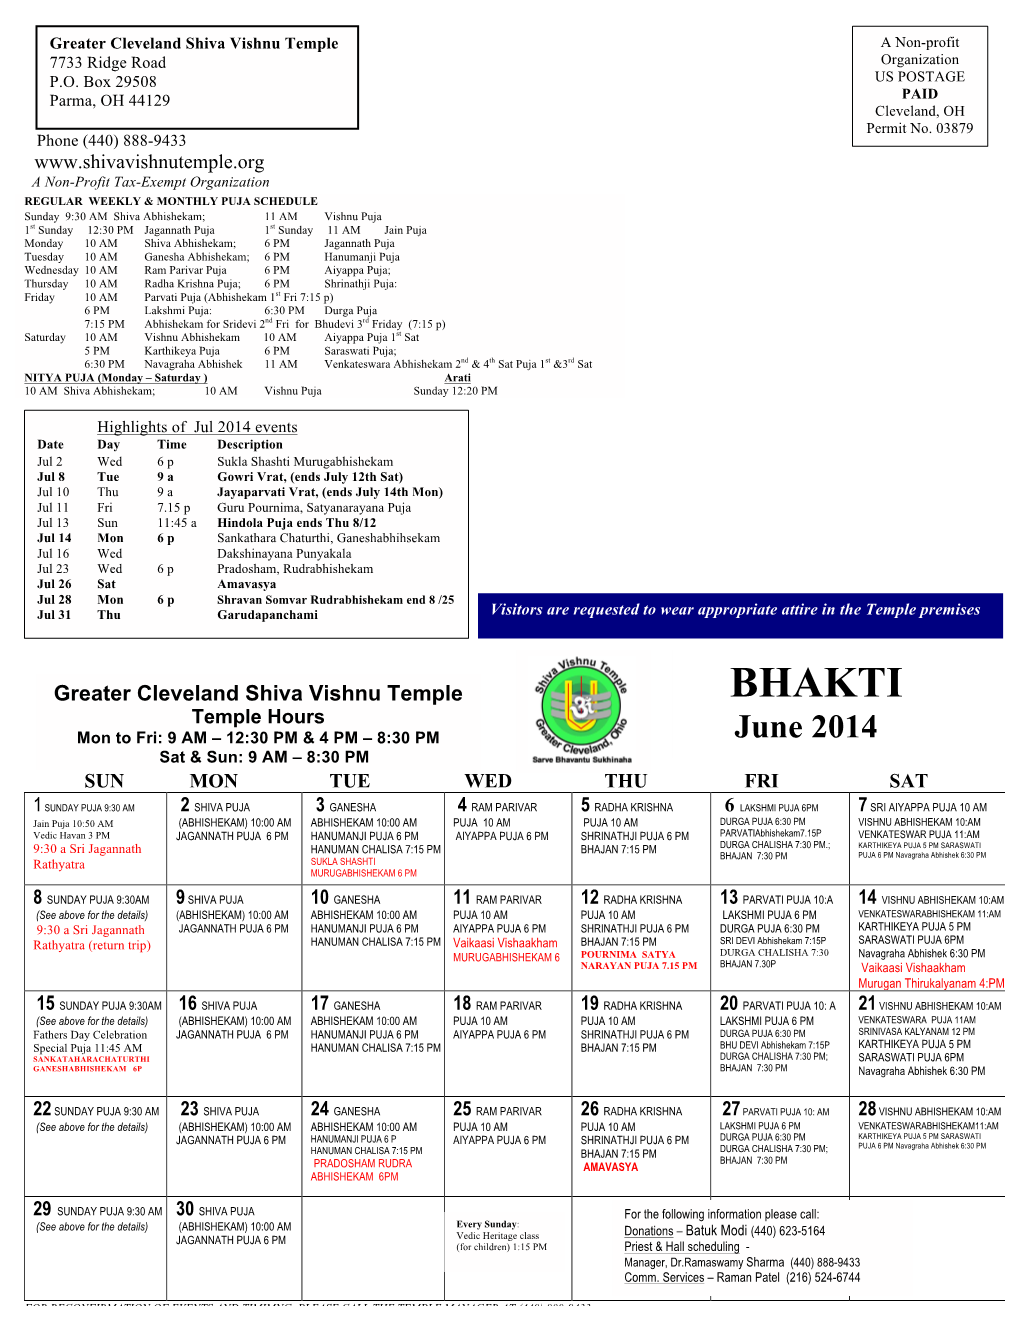 BHAKTI Temple Hours Mon to Fri: 9 AM – 12:30 PM & 4 PM – 8:30 PM June 2014